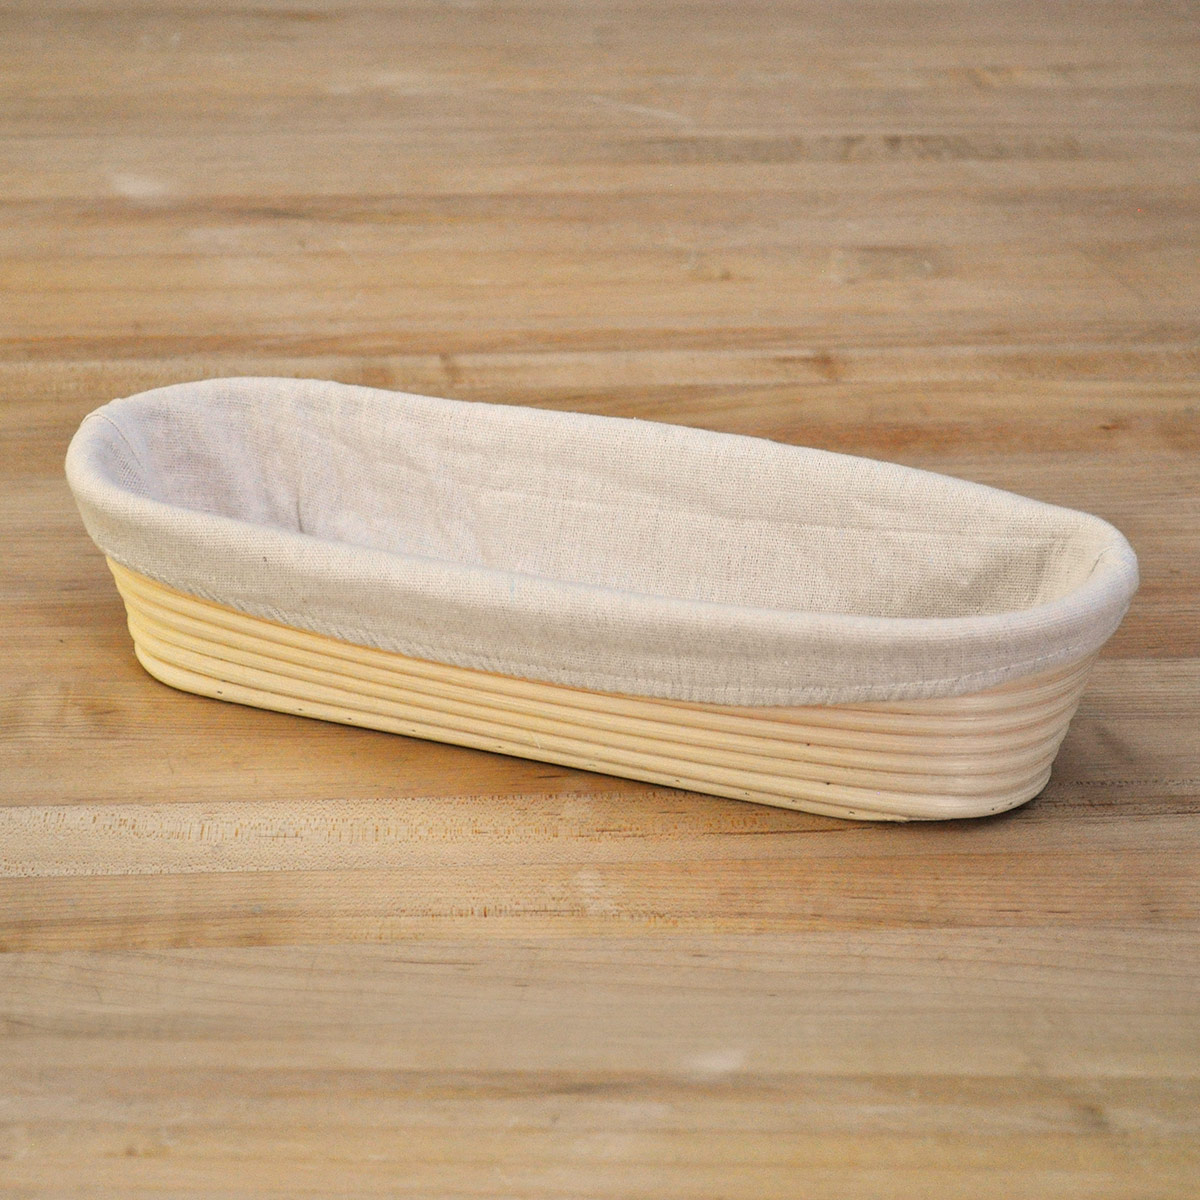 Oval Banneton Brotform Baking Supplies Bread Fermentation Baskets